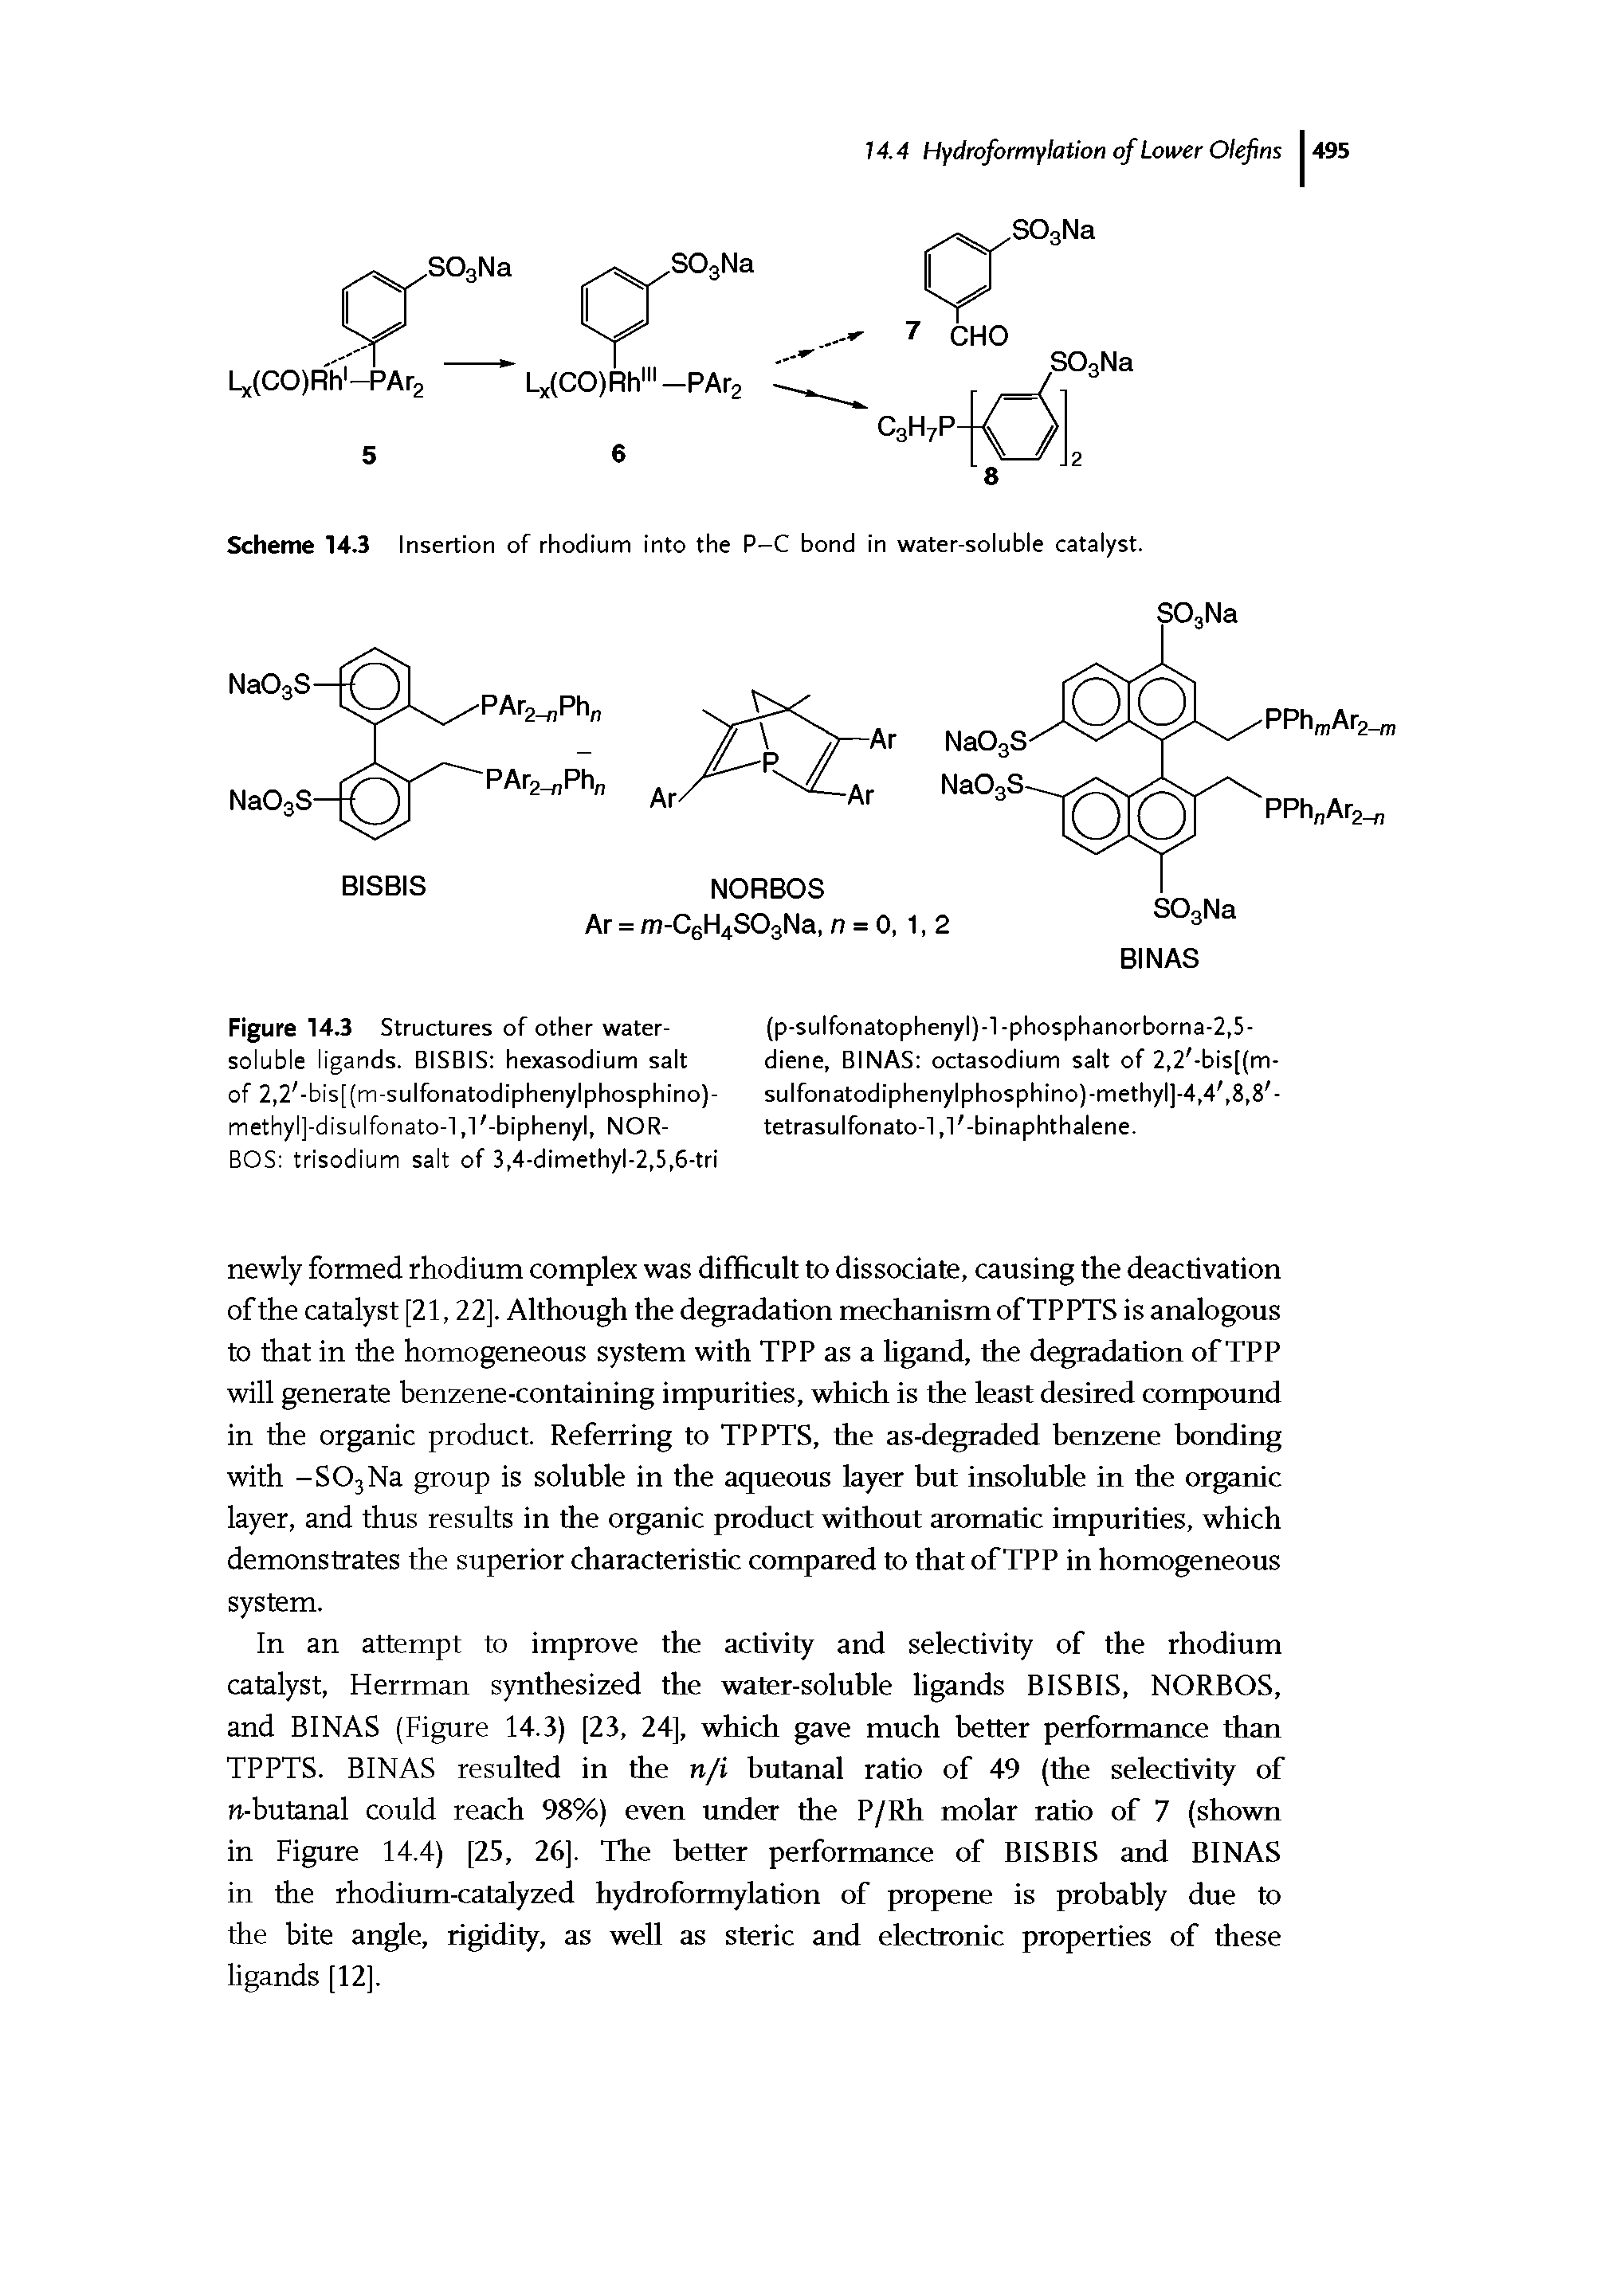 Figure 14.3 Structures of other water-soluble ligands. BISBIS hexasodium salt of 2,2 -bis[(m-sulfonatodiphenylphosphino)-methyl]-disulfonato-l,l -biphenyl, NOR-BOS trisodium salt of 3,4-dimethyl-2,5,6-tri...